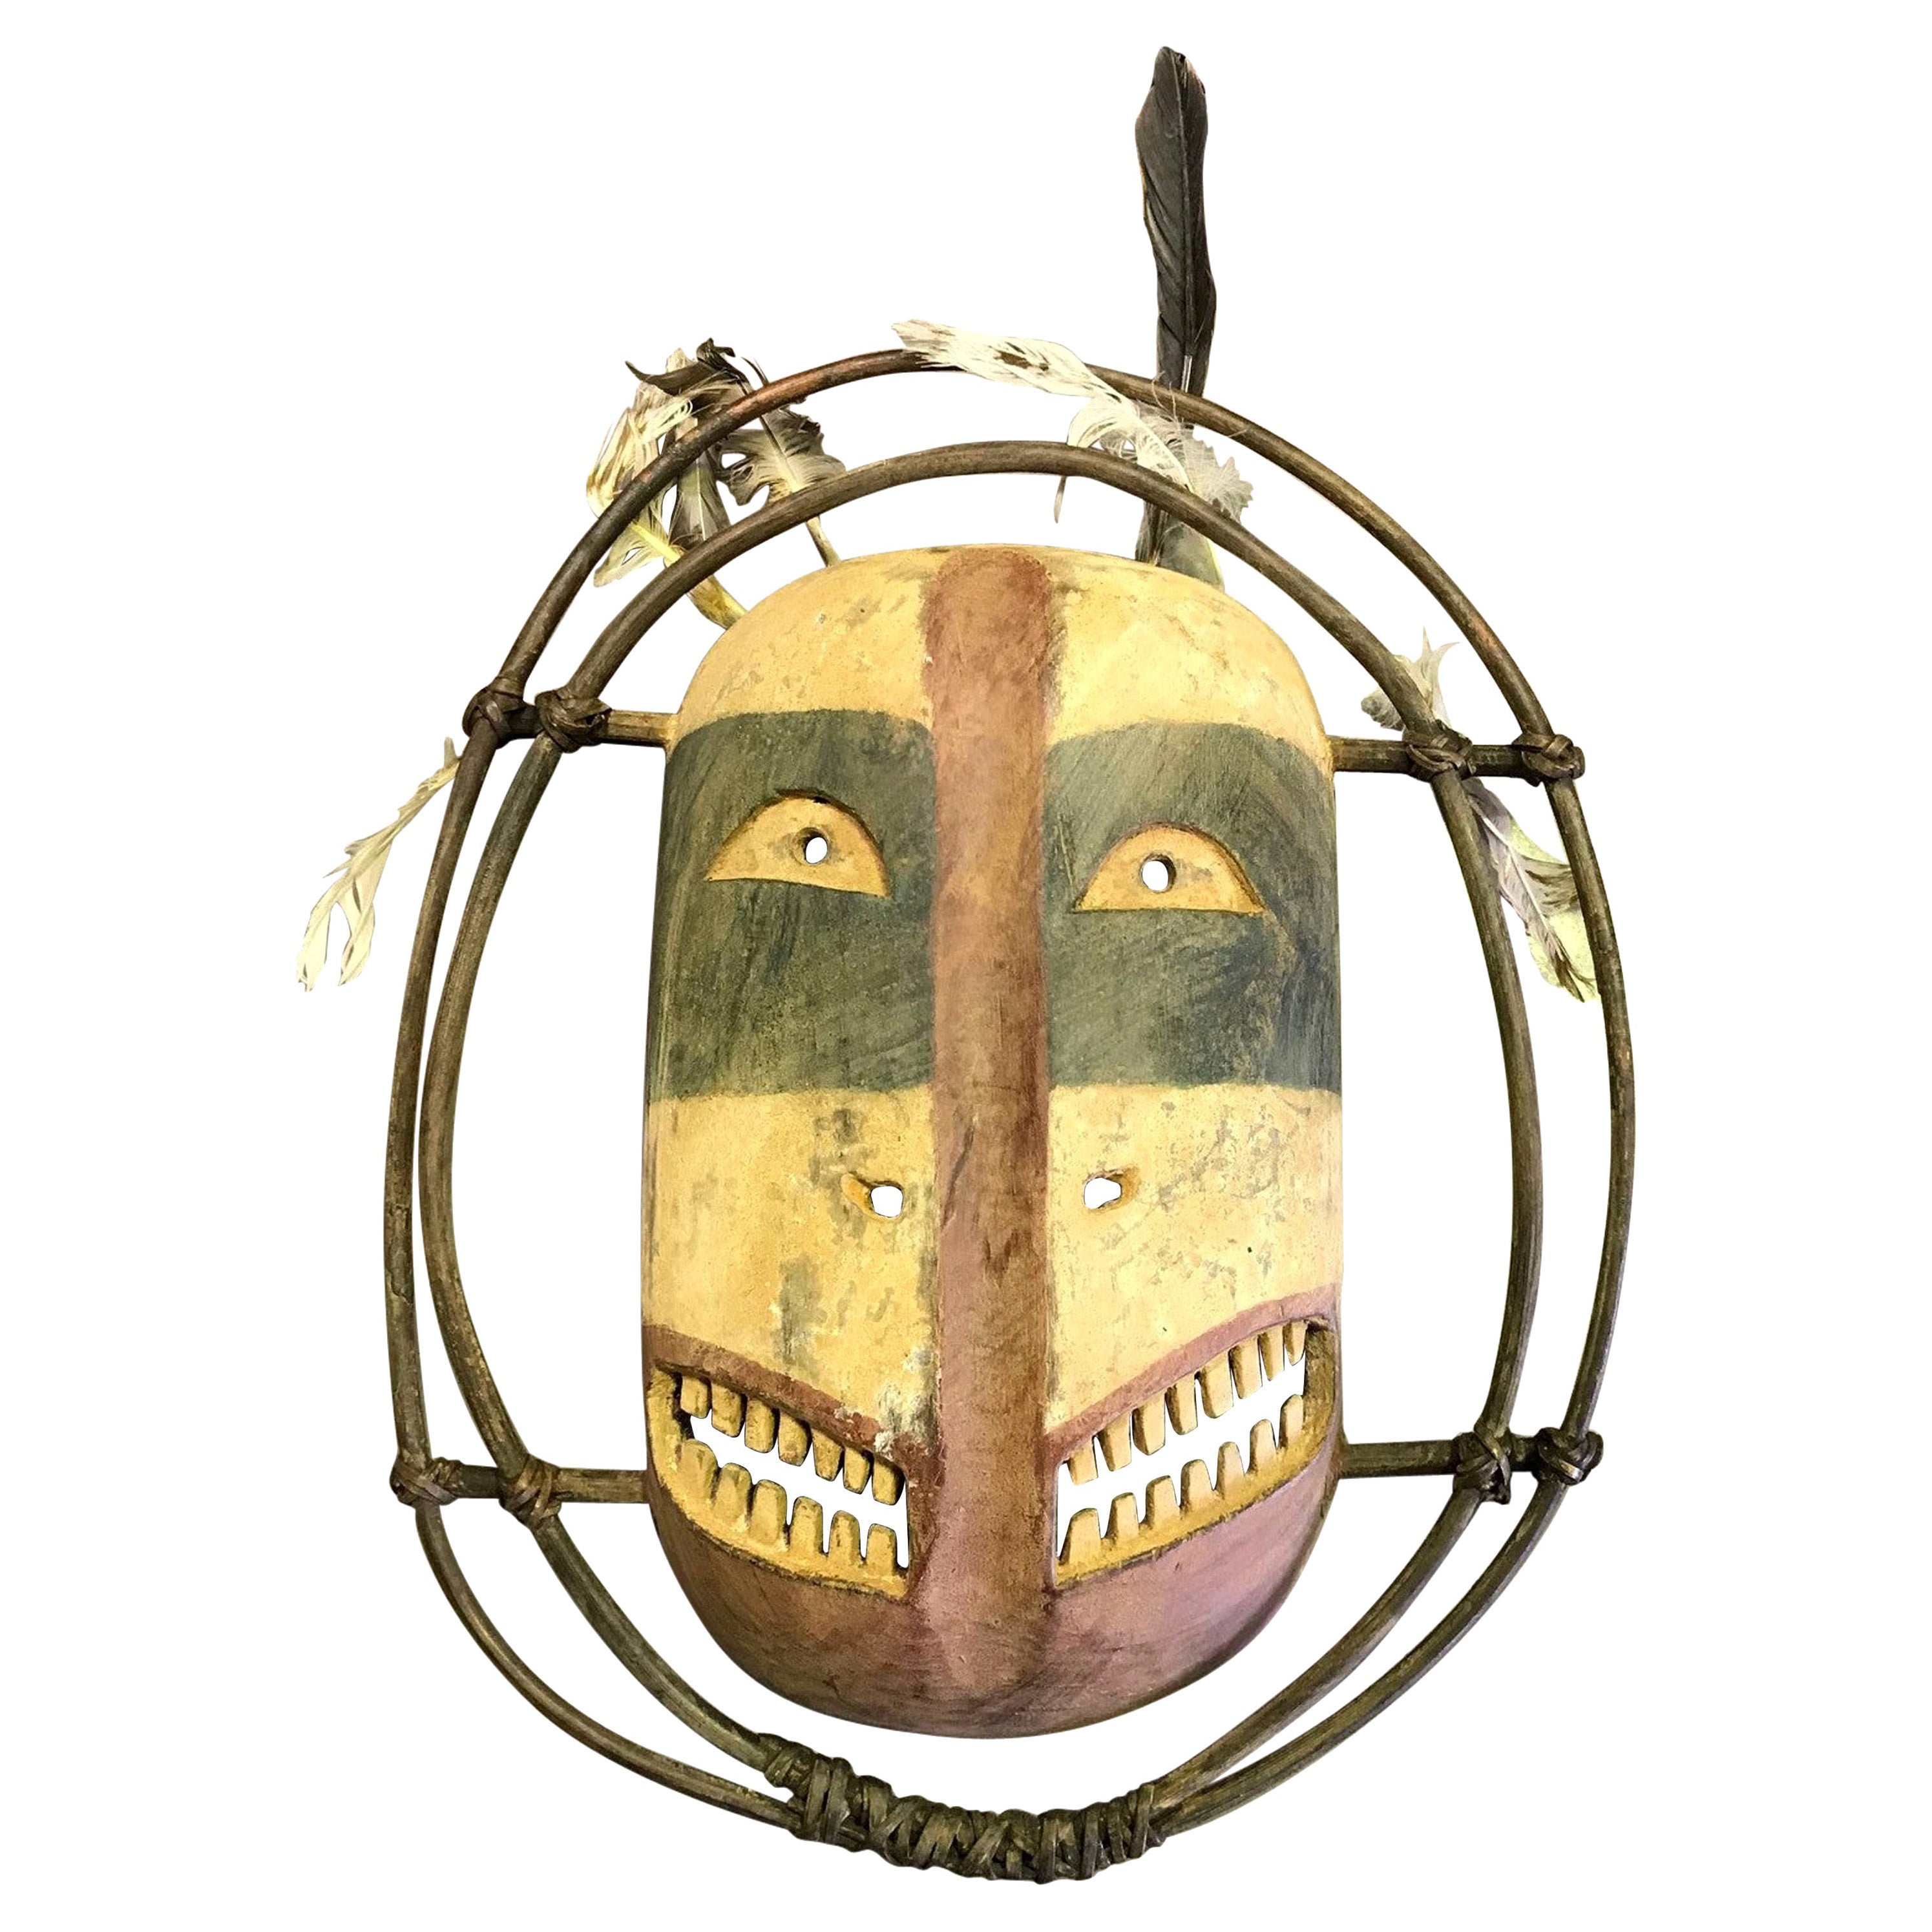 Masque anthropomorphe amérindien en bois polychrome sculpté de l'Alaska Yupik Yup'ik